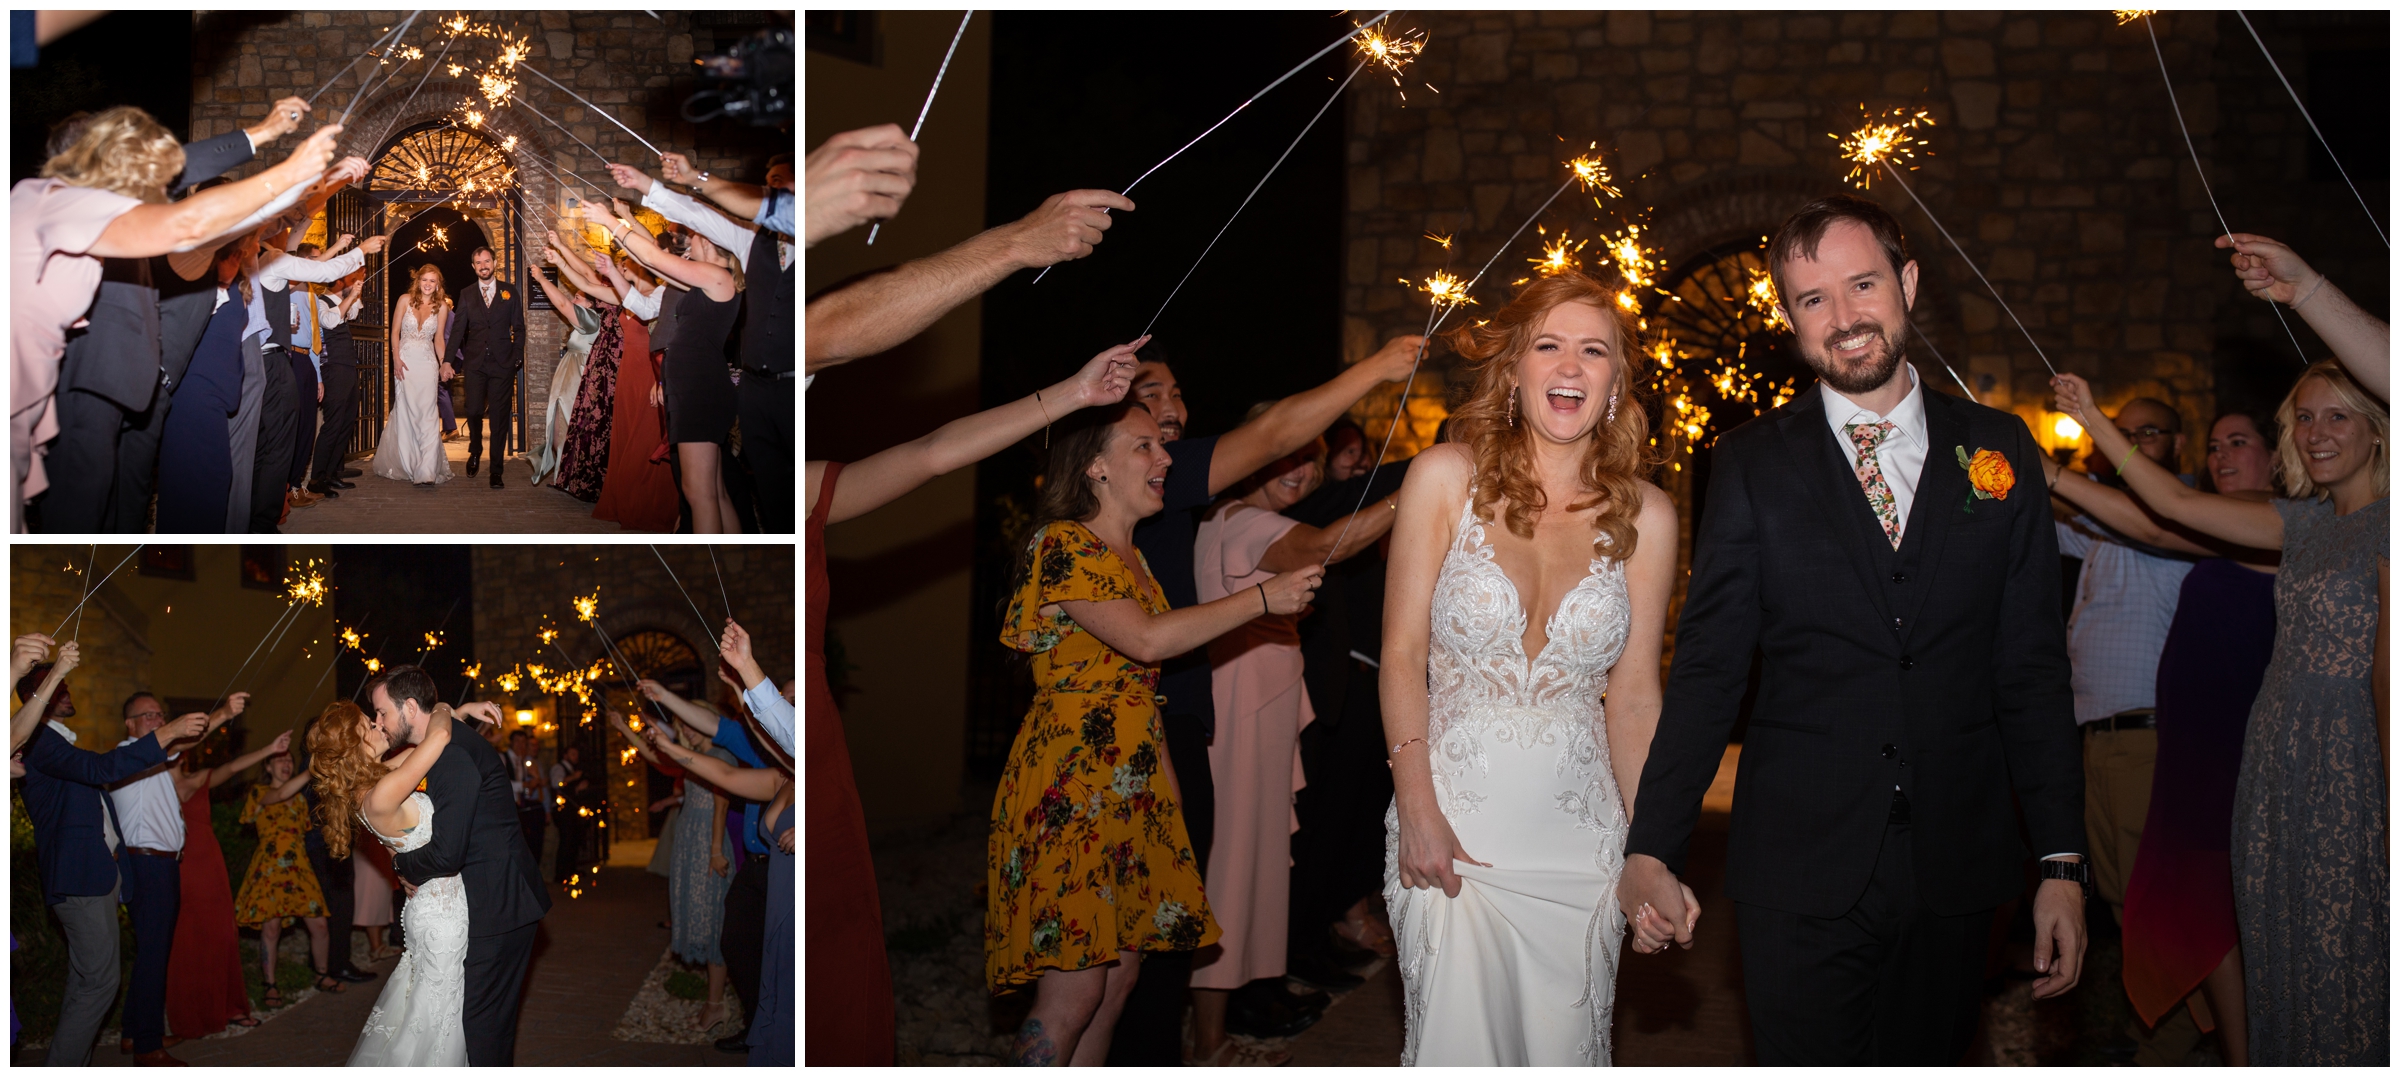 wedding sparkler exit inspiration at solterra wedding reception in morrison Colorado 